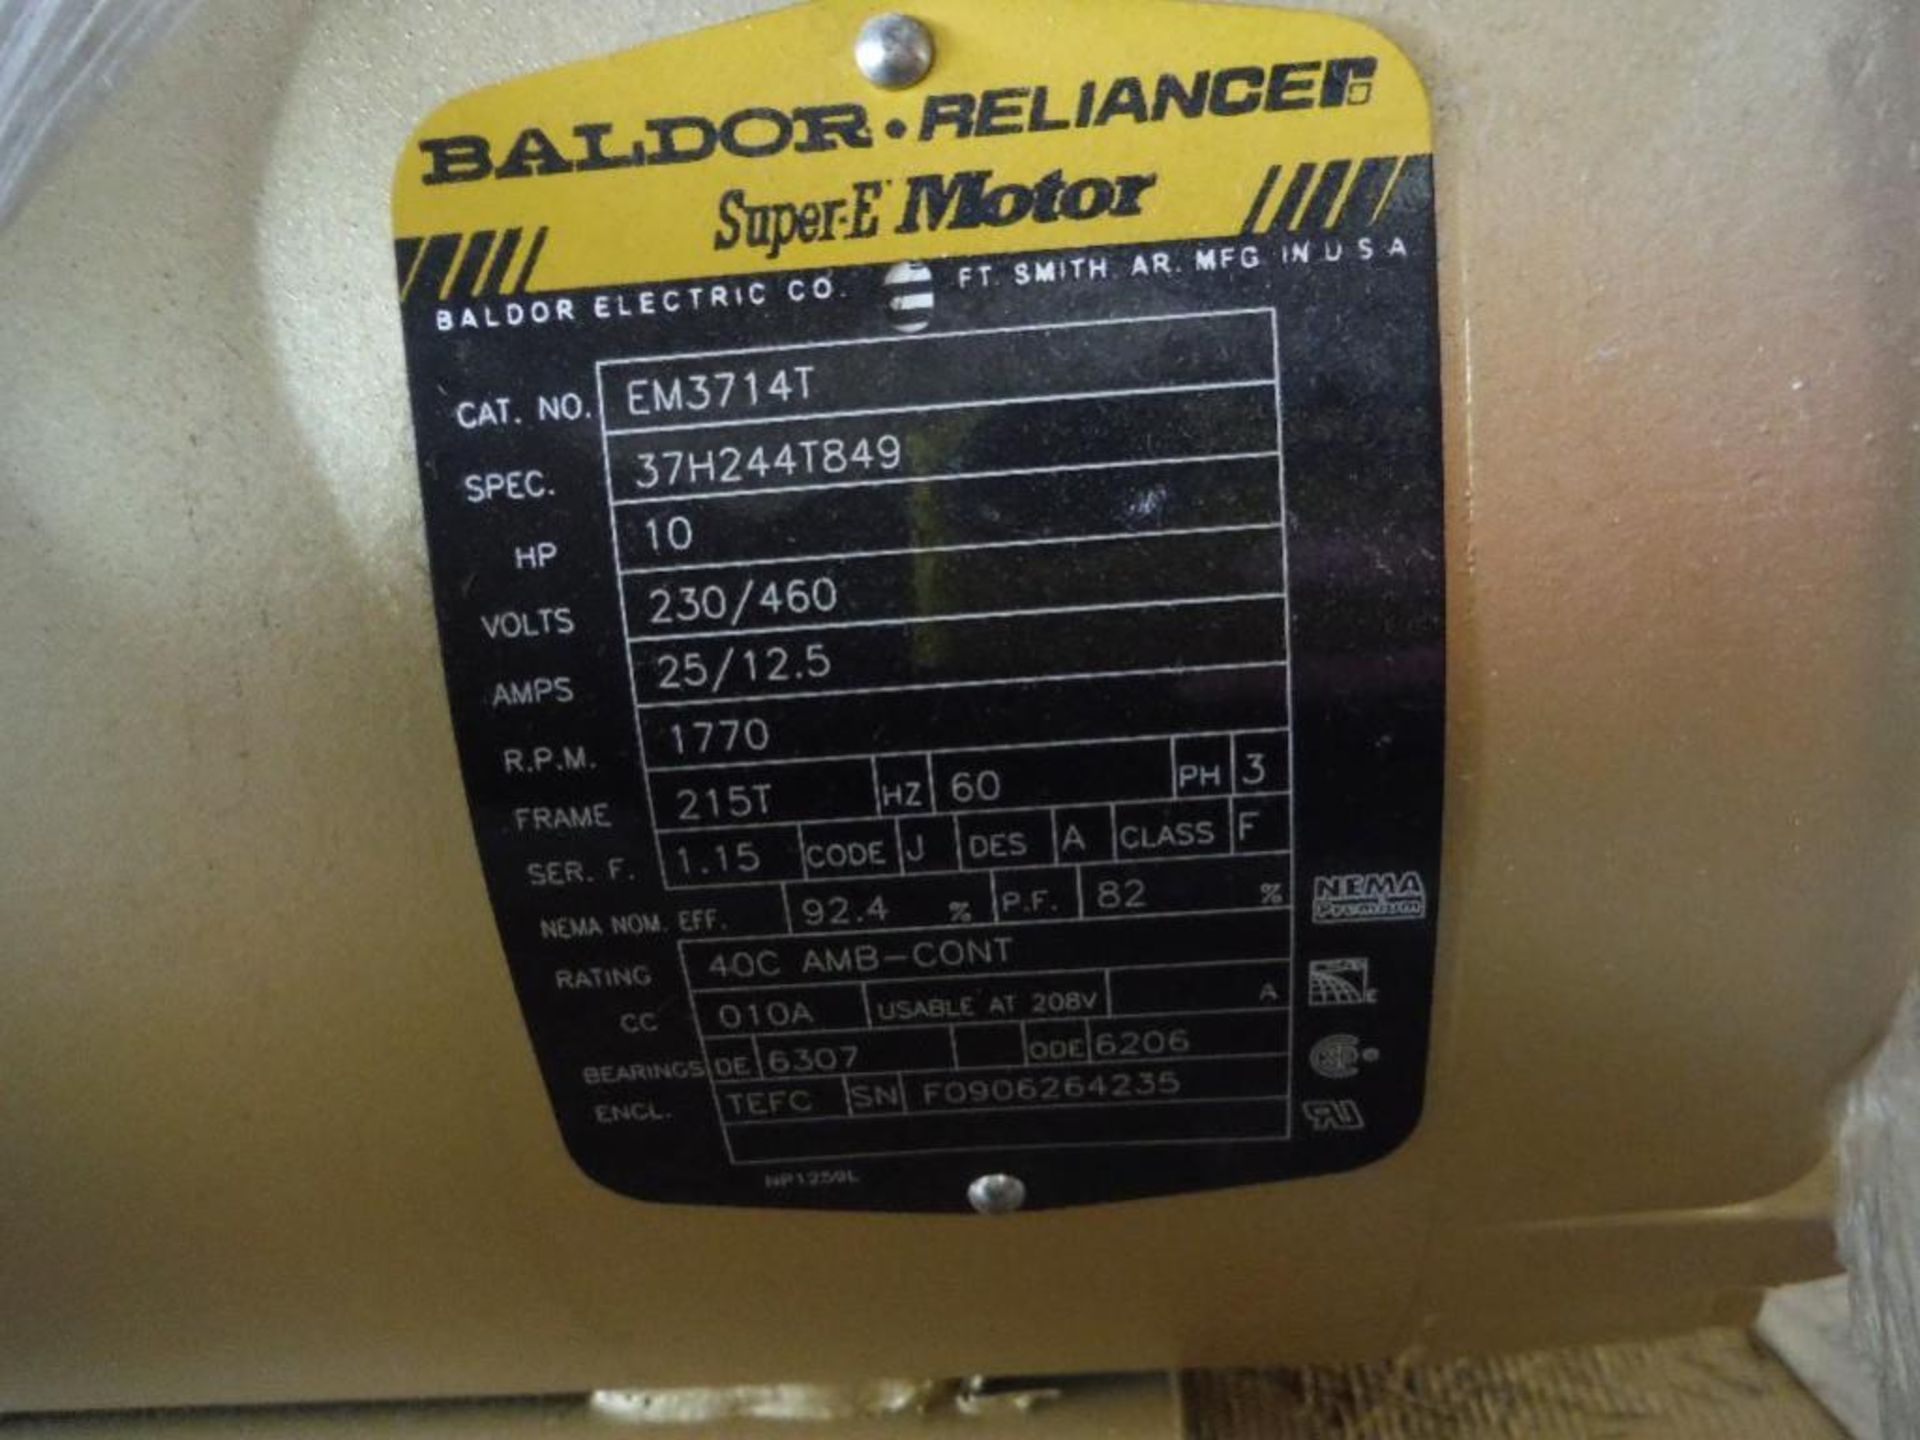 New Baldor electric motor, 10 hp, 3 ph, frame 215T, 1760 rpm - Rigging Fee: $25 - Image 2 of 2